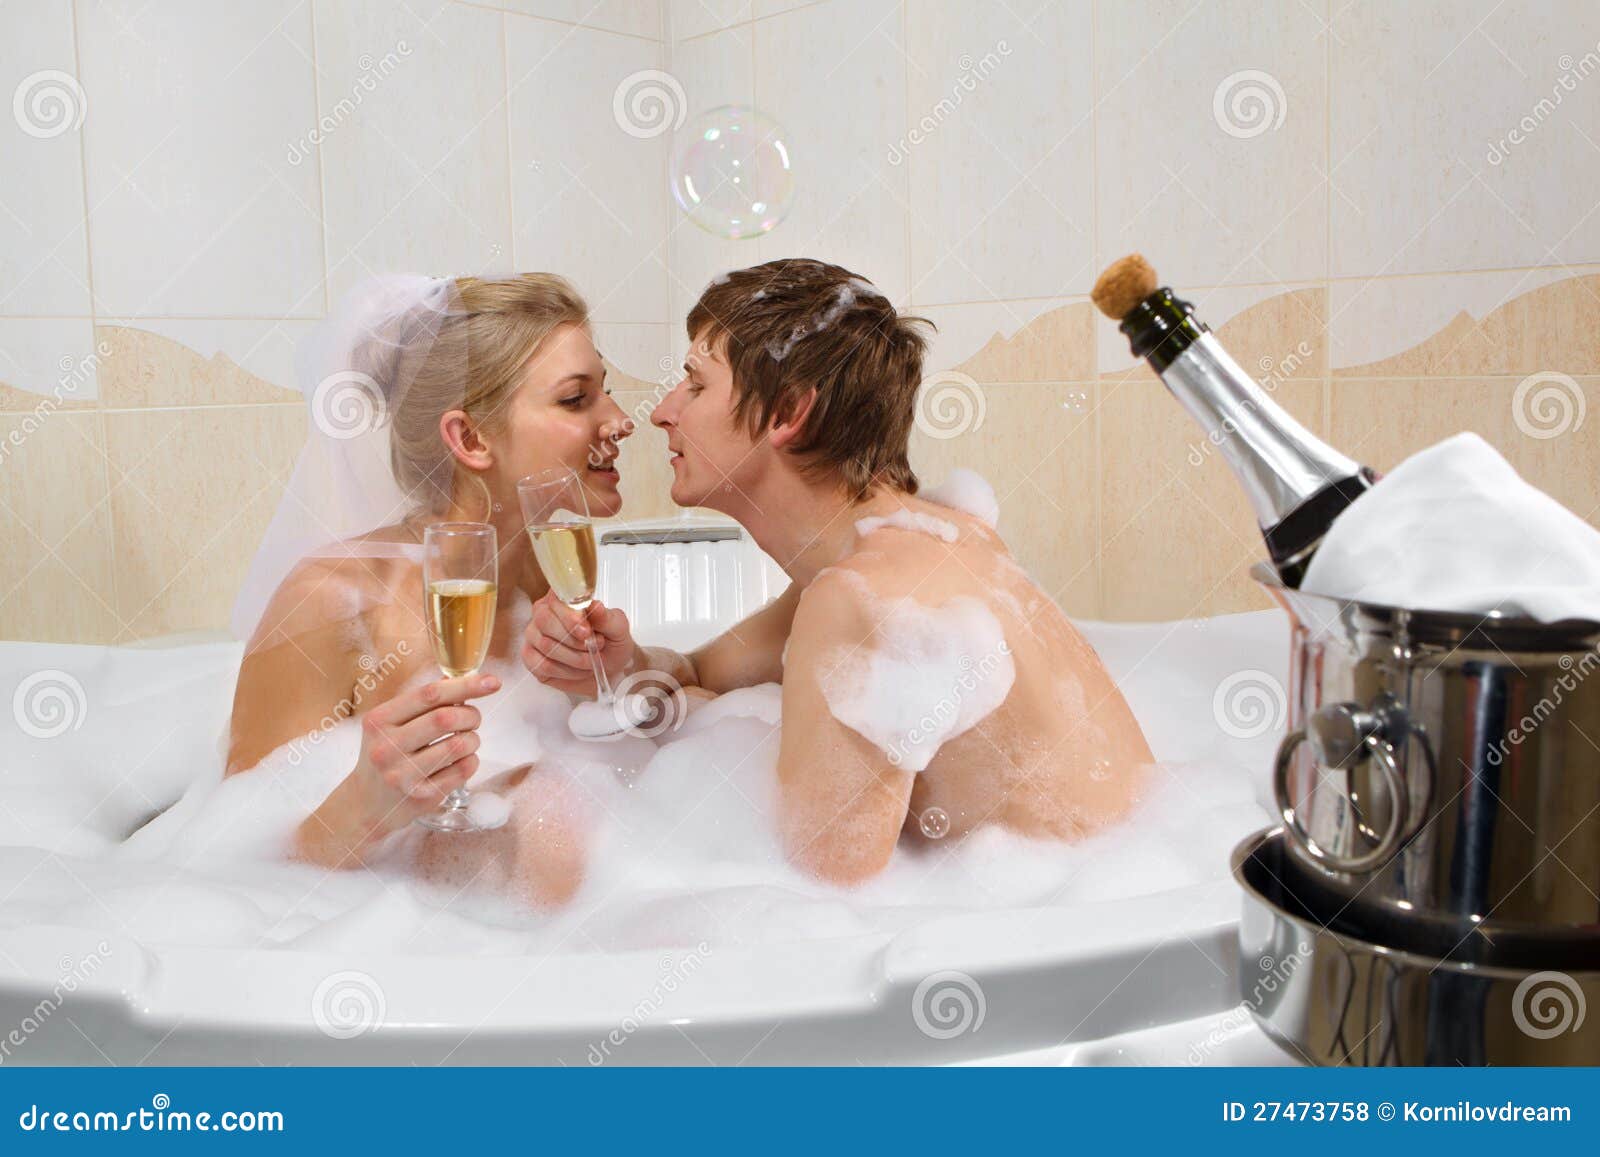 Wedding Couple Is Enjoying A Bath With Bubbles Stock Photo Image Of